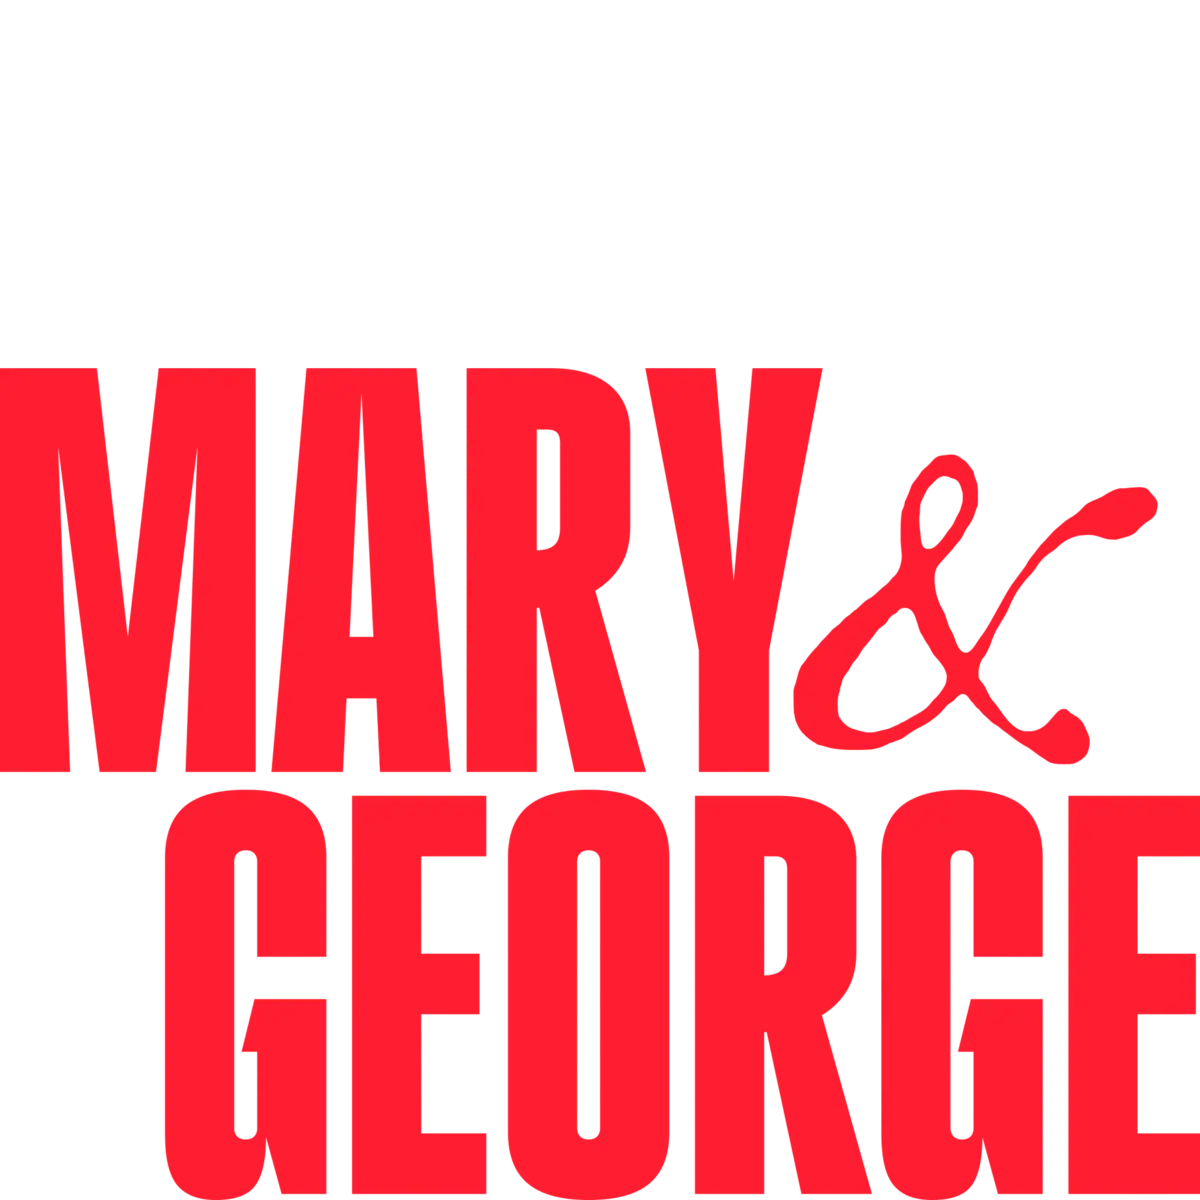 Mary & George.